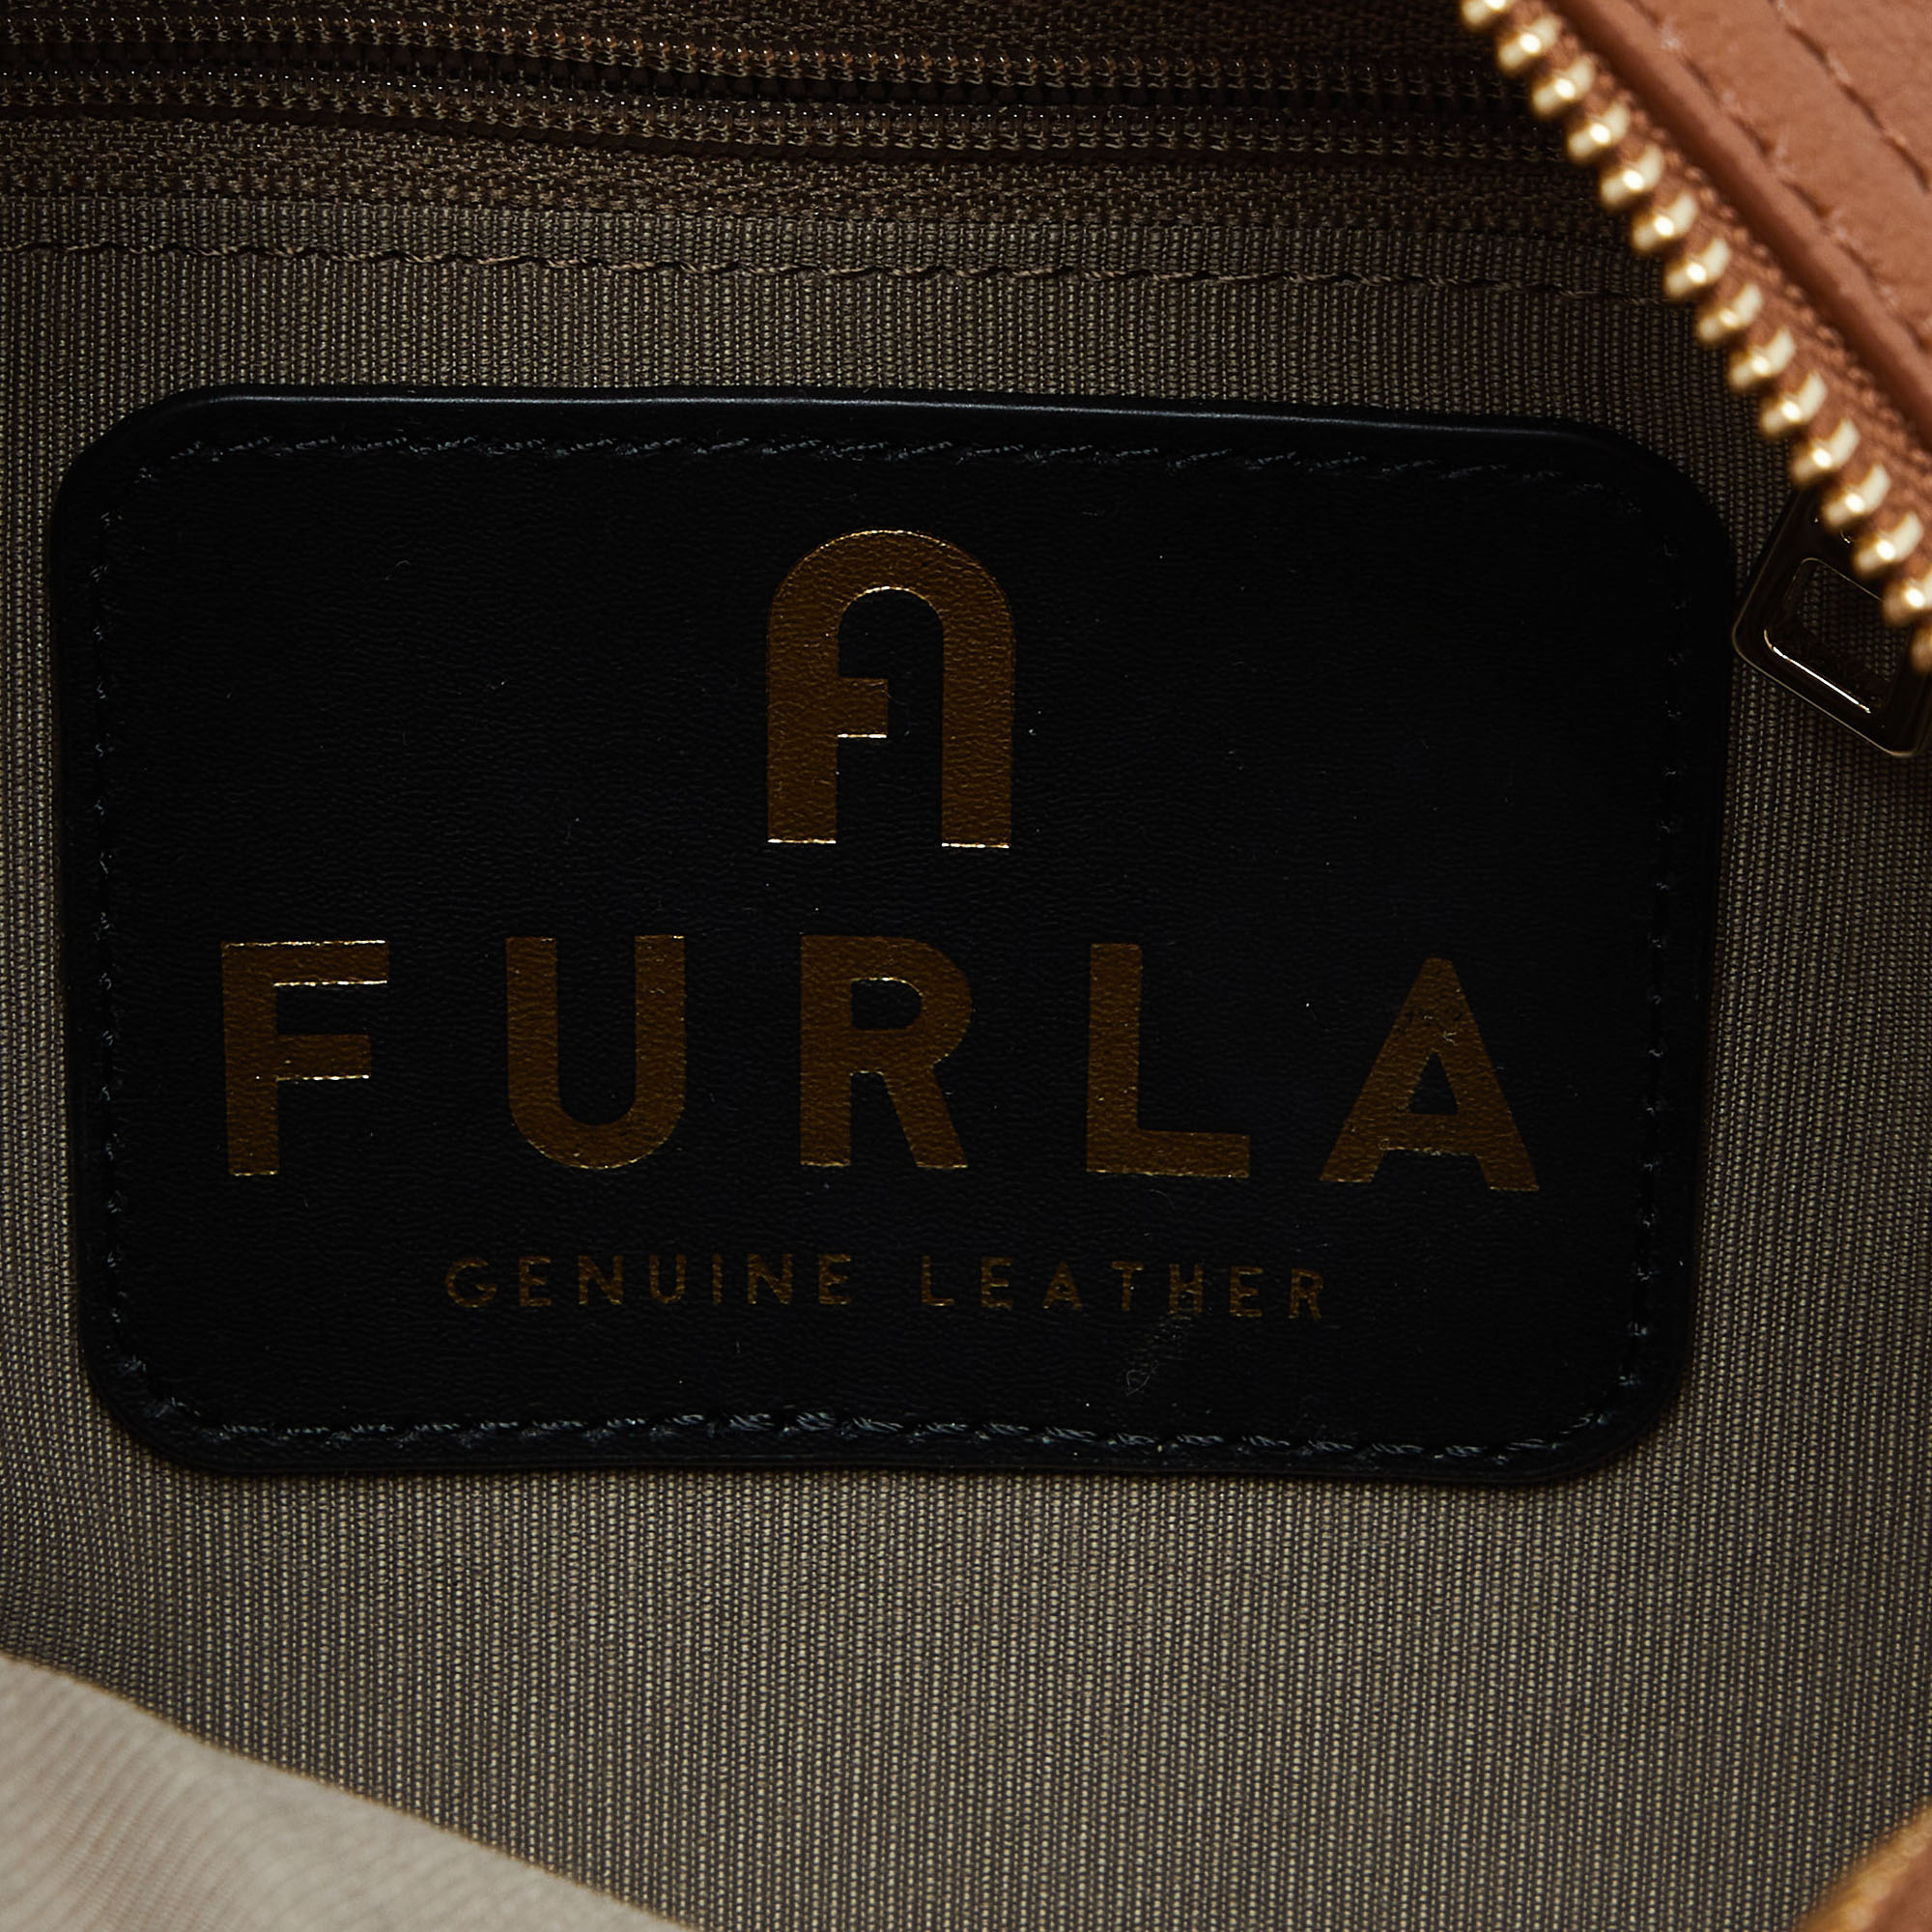 Furla Brown Leather Mini Backpack